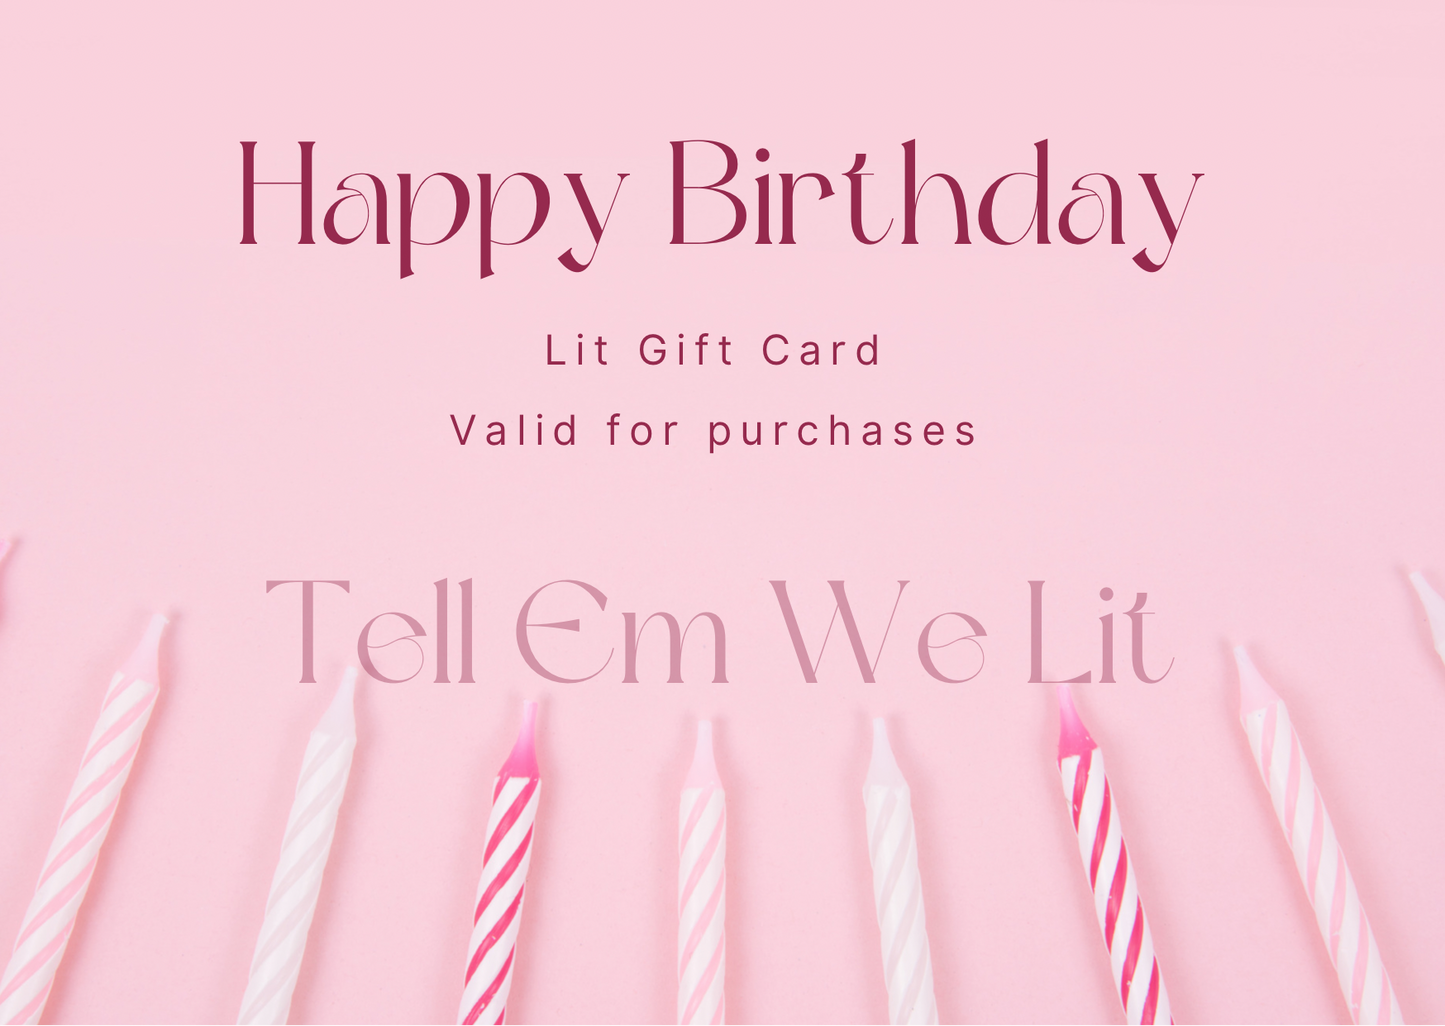 Lit Gift Card - Birthday